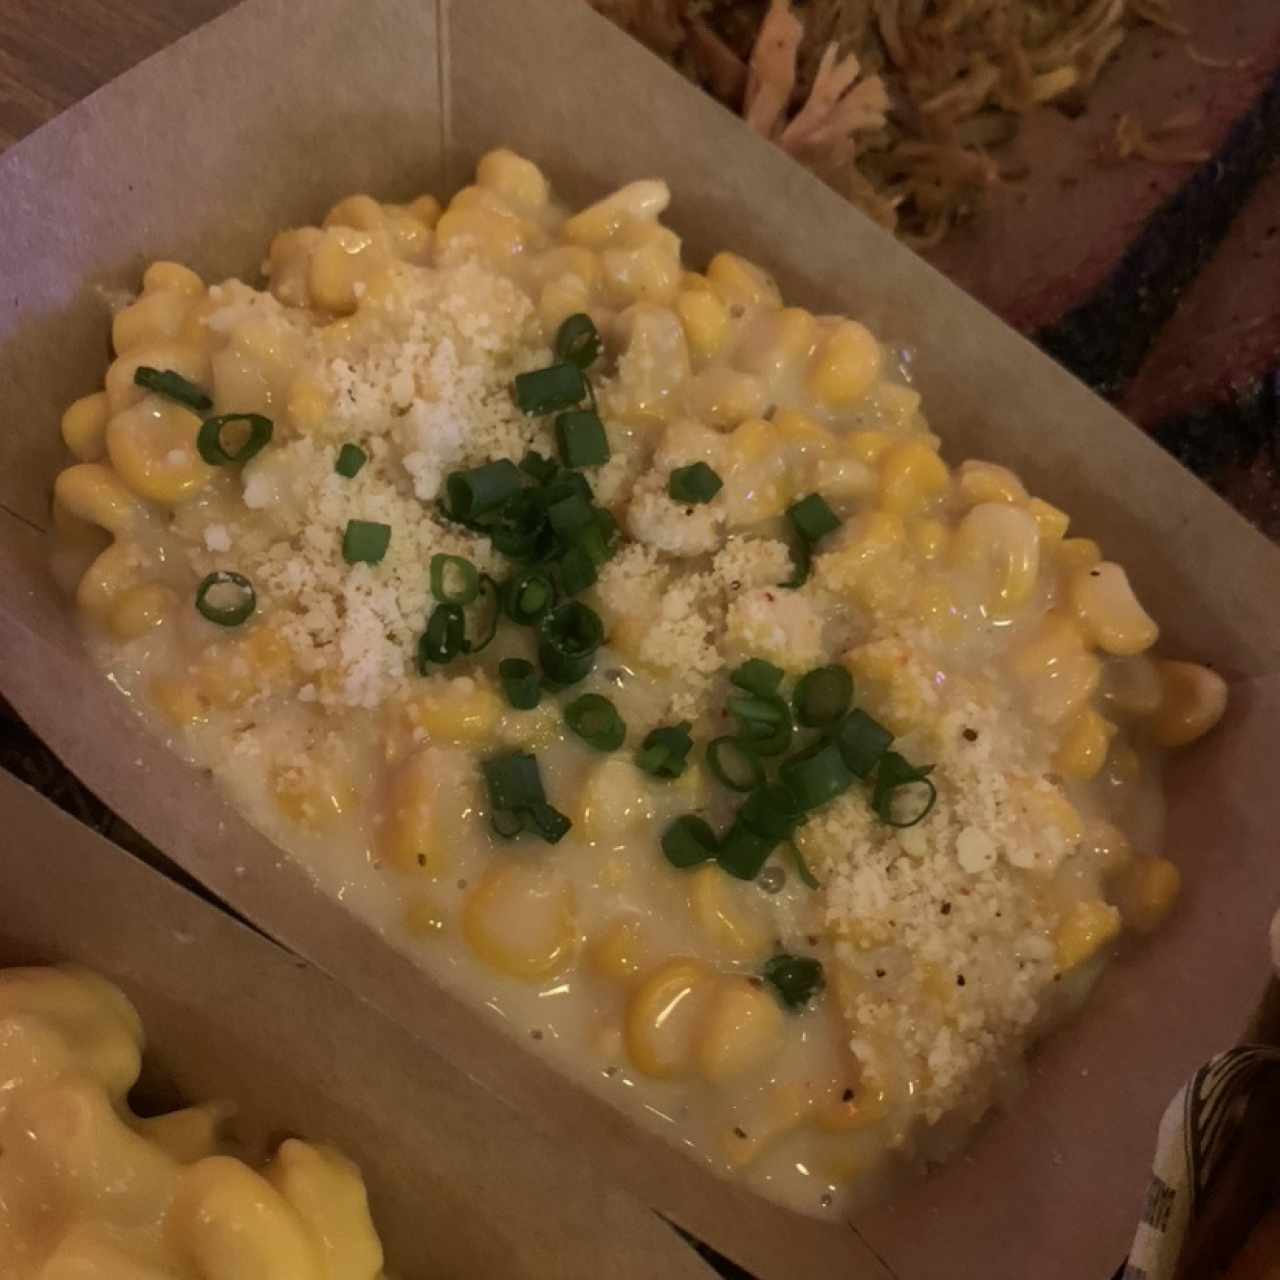 Sides - Texas Creamed Corn